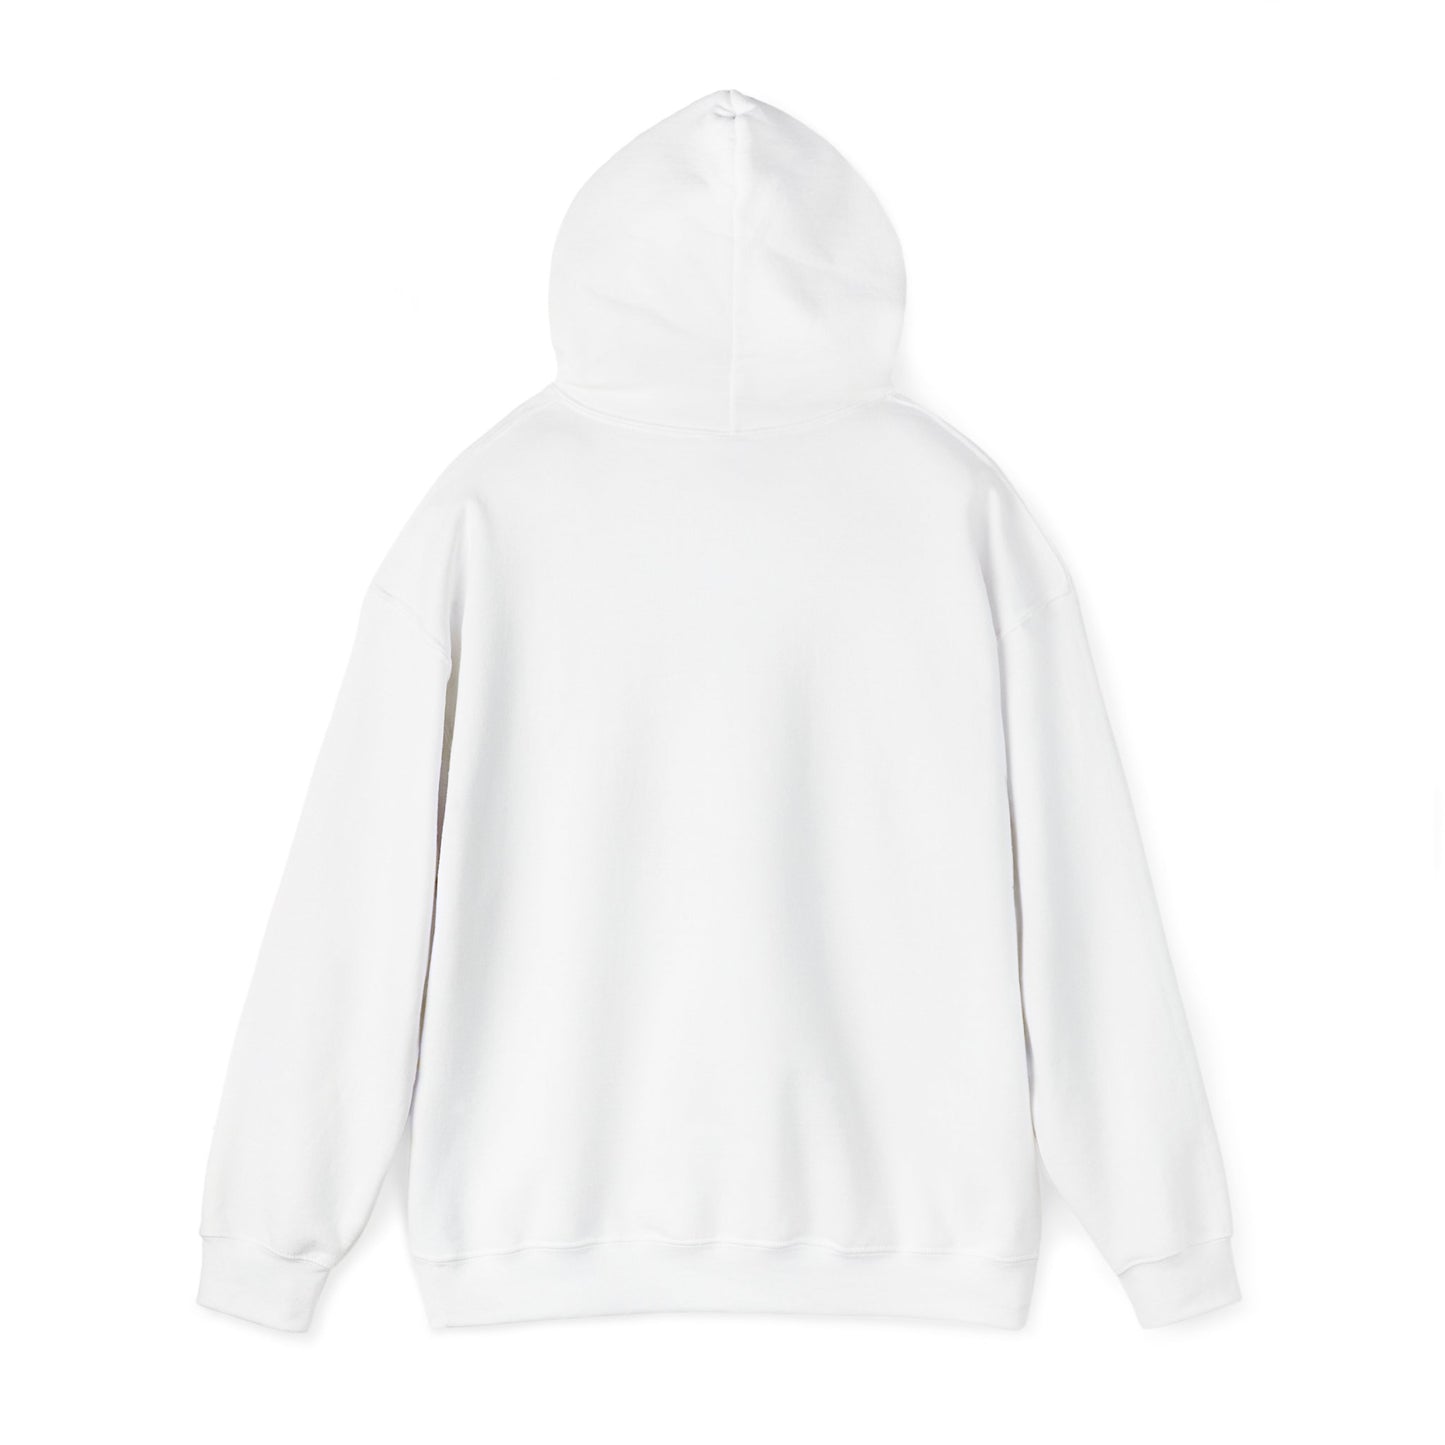 Seniors 2024 Softball - Gildan Unisex Heavy Blend™ Hooded Sweatshirt